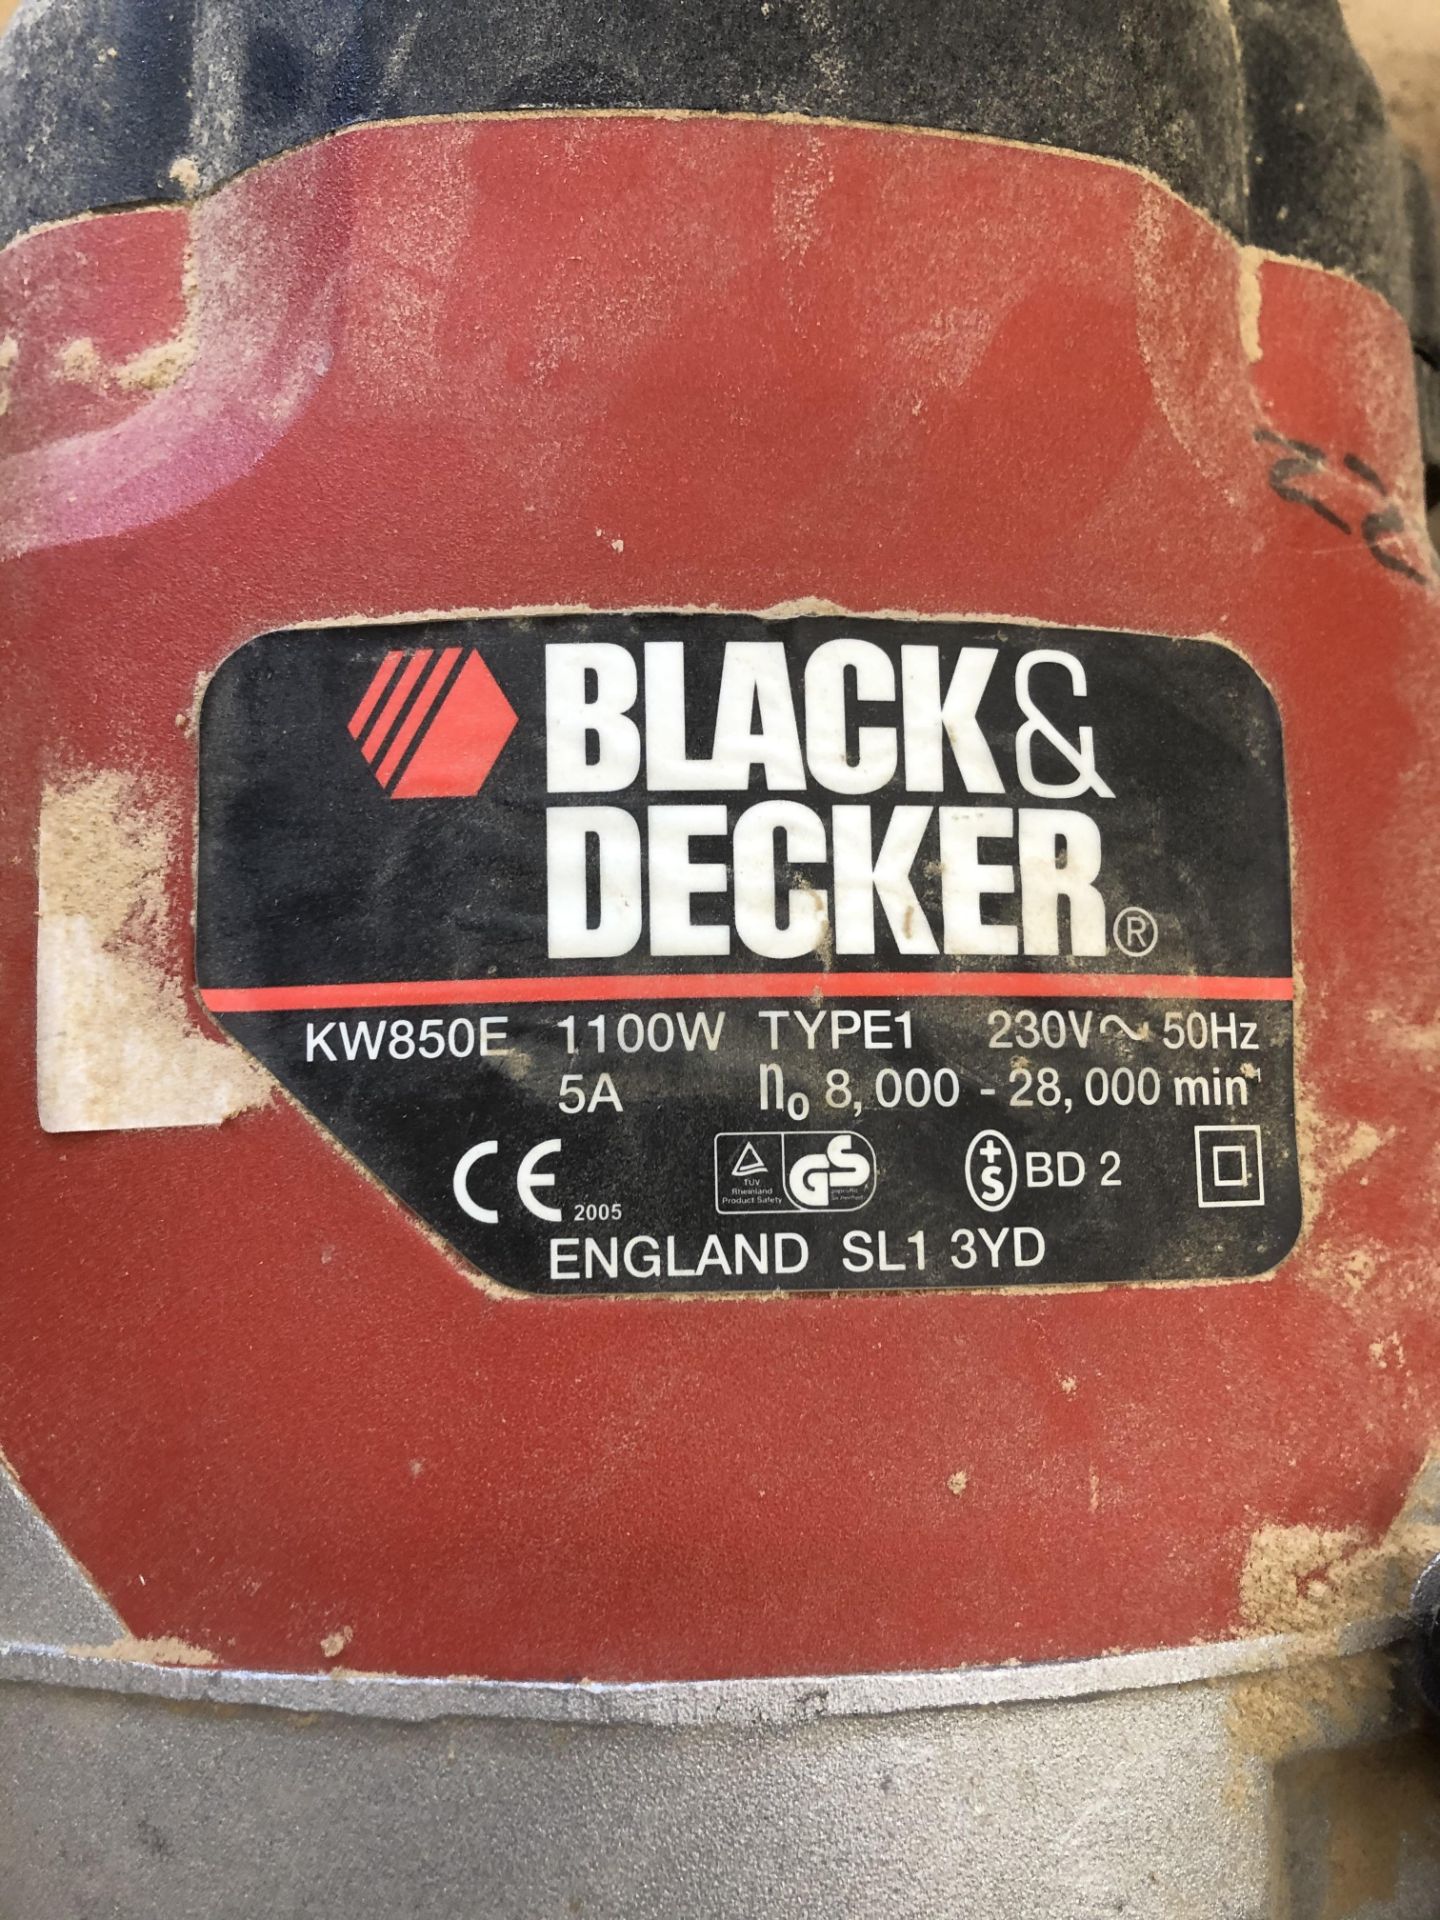 Black & Decker KW850E Plunge Router - Image 3 of 3